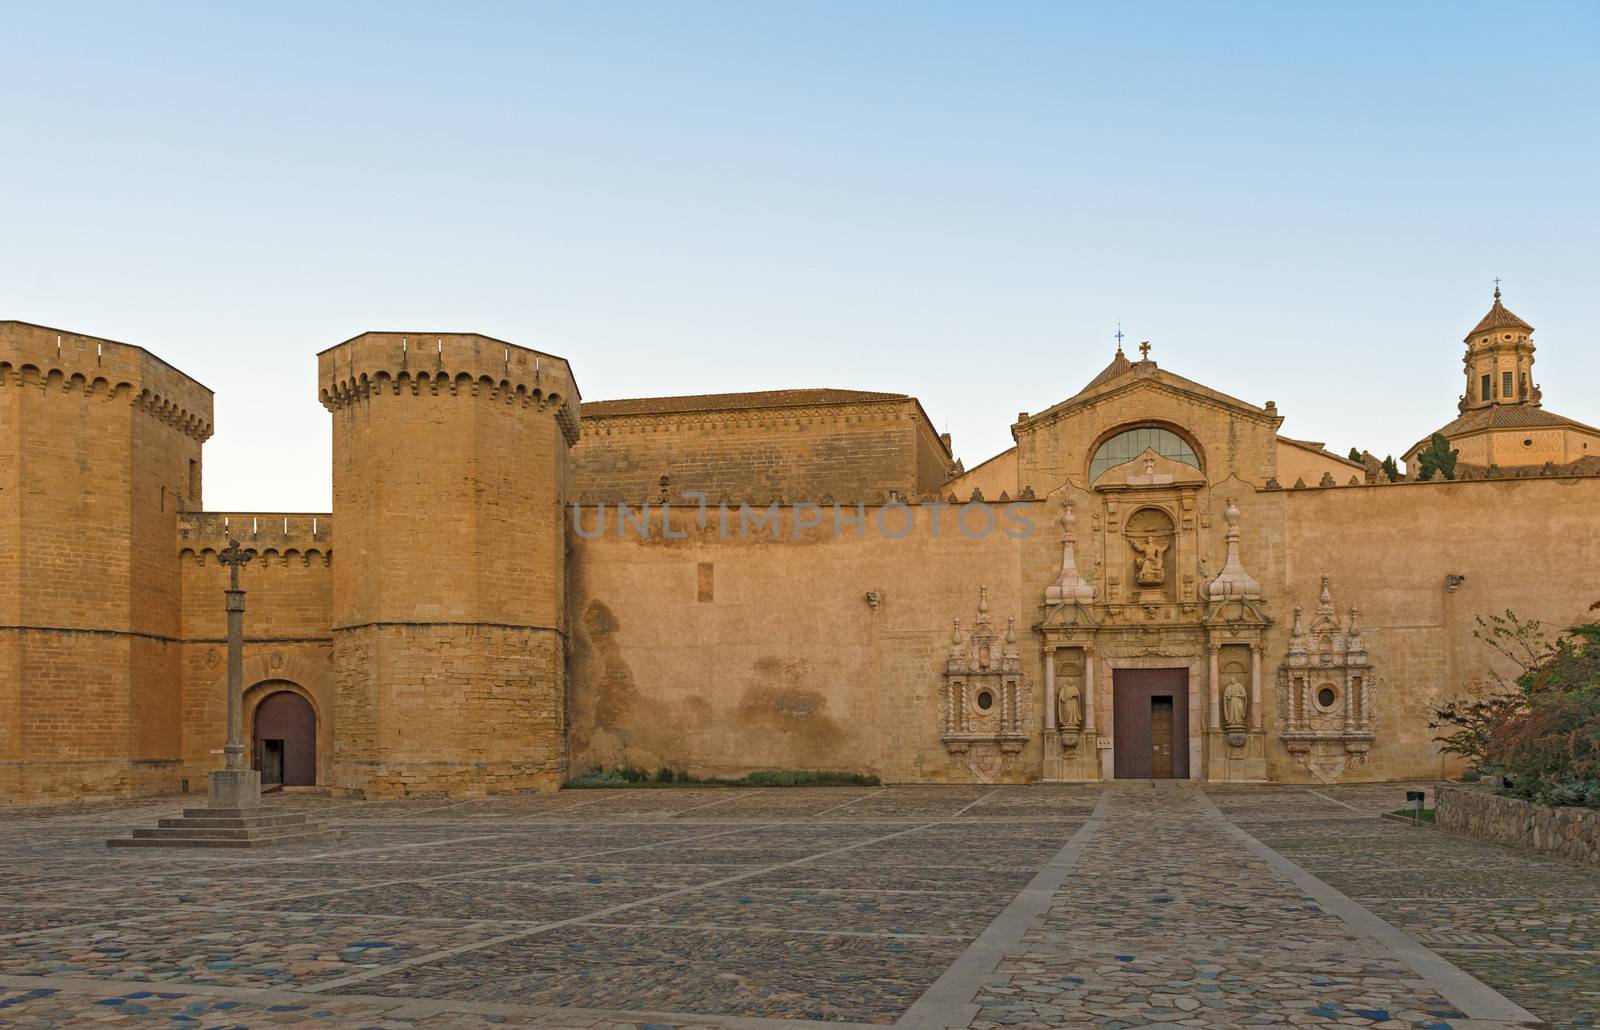 Monastery of Santa Maria de Poblet inCatalonia,Spain. It is UNESCO World Heritage Site. 